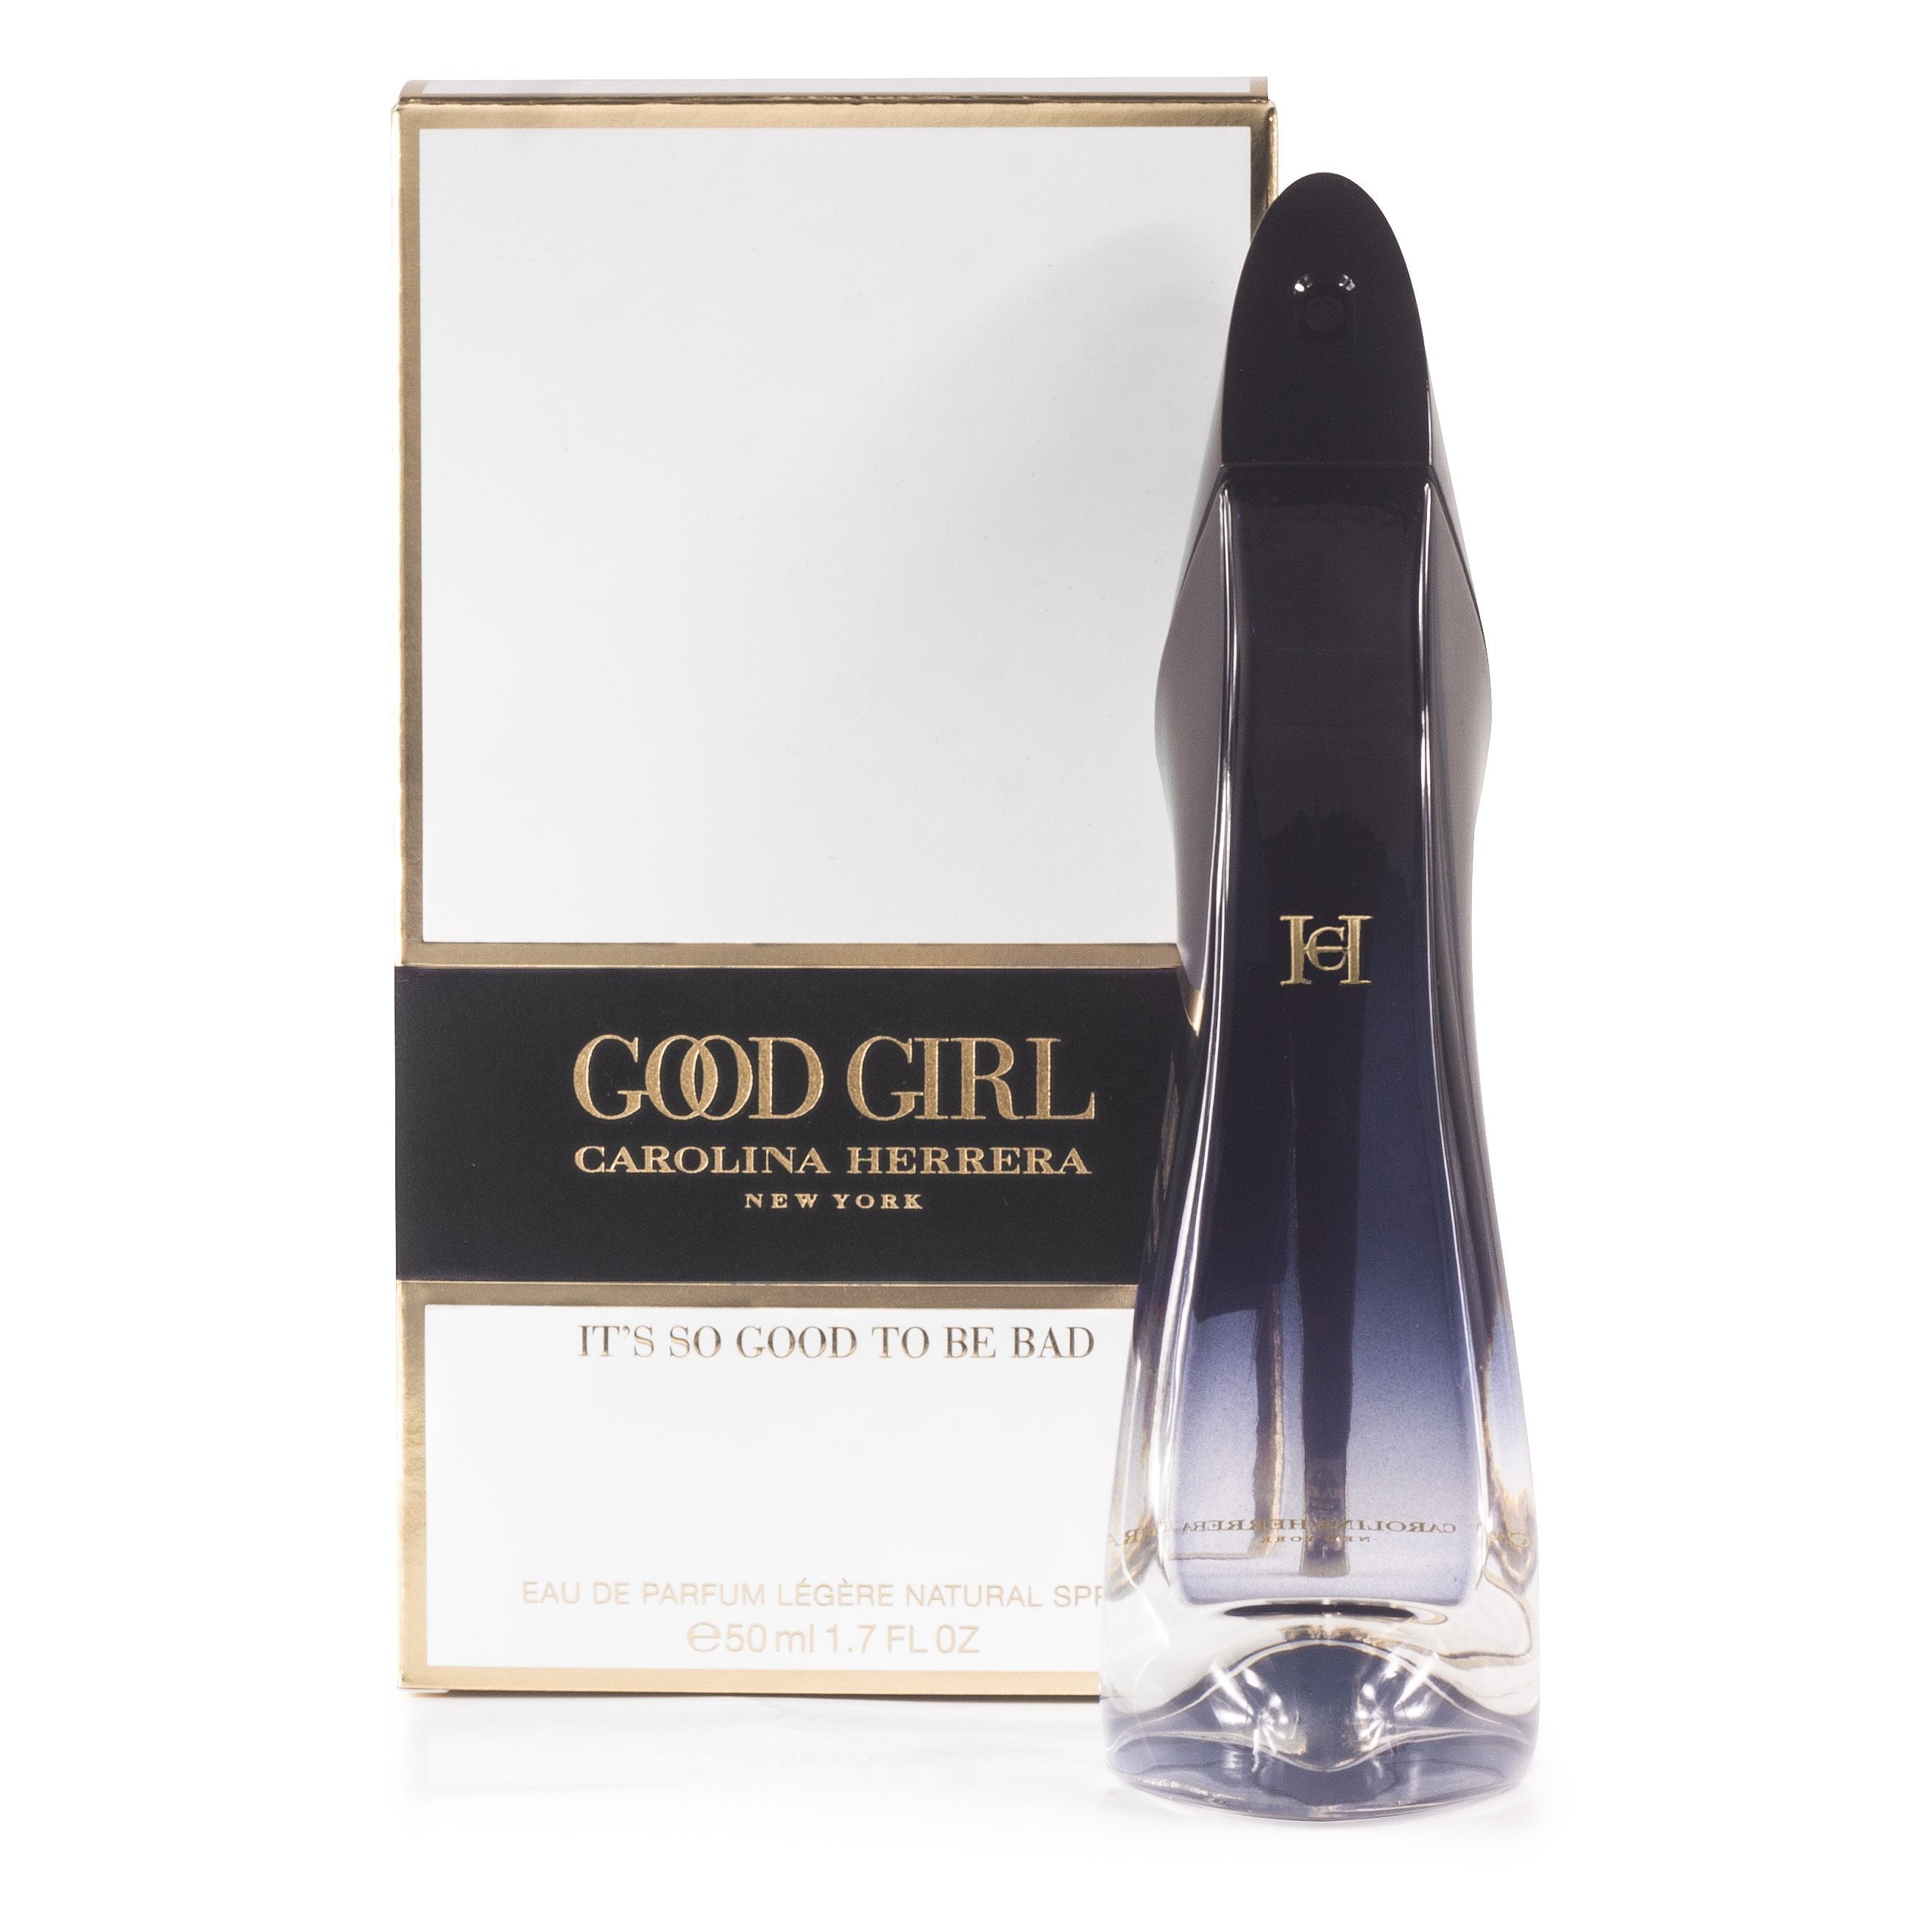 Carolina Herrera Good Girl Eau de Parfum Legere Spray 1.7 oz